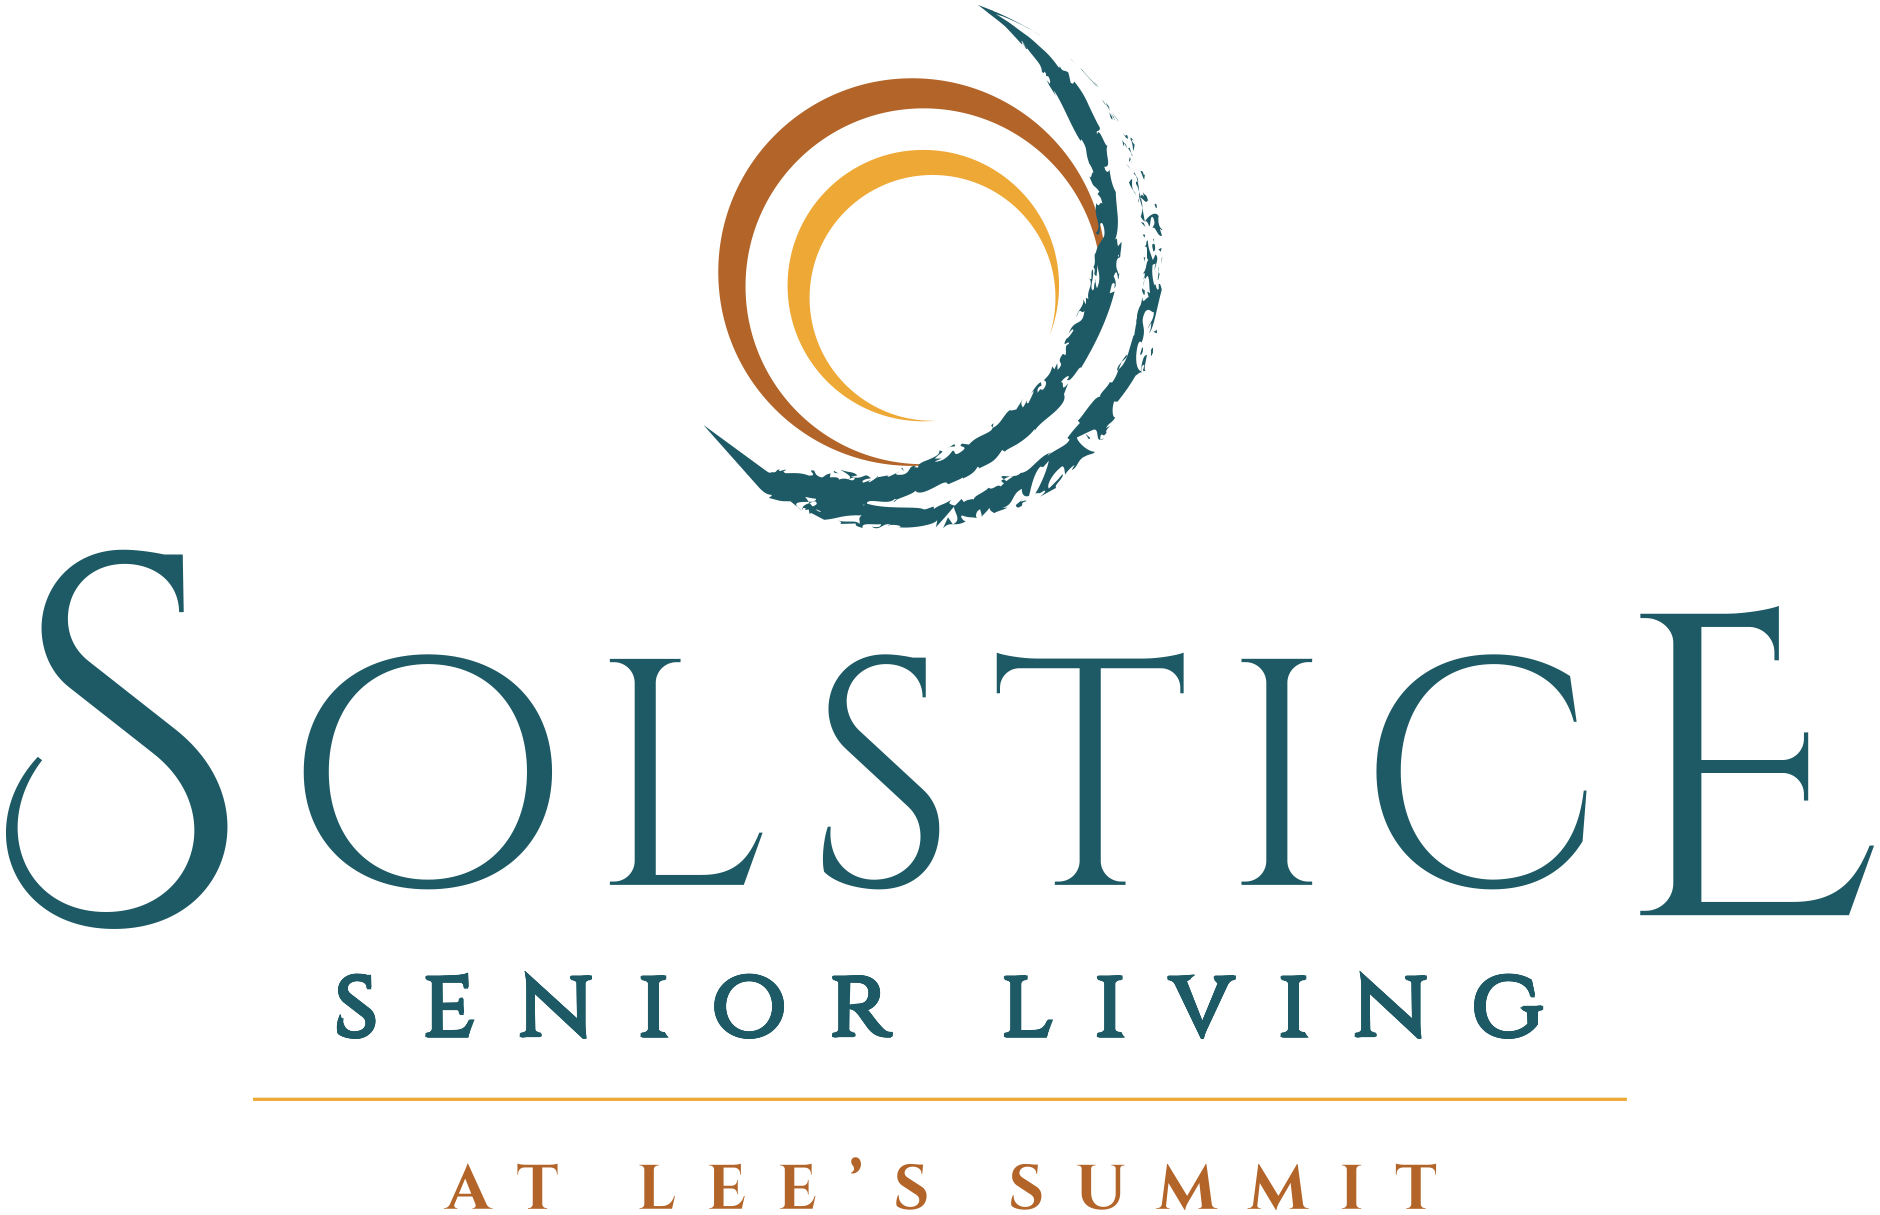 Solstice Senior Living at Lee's Summit